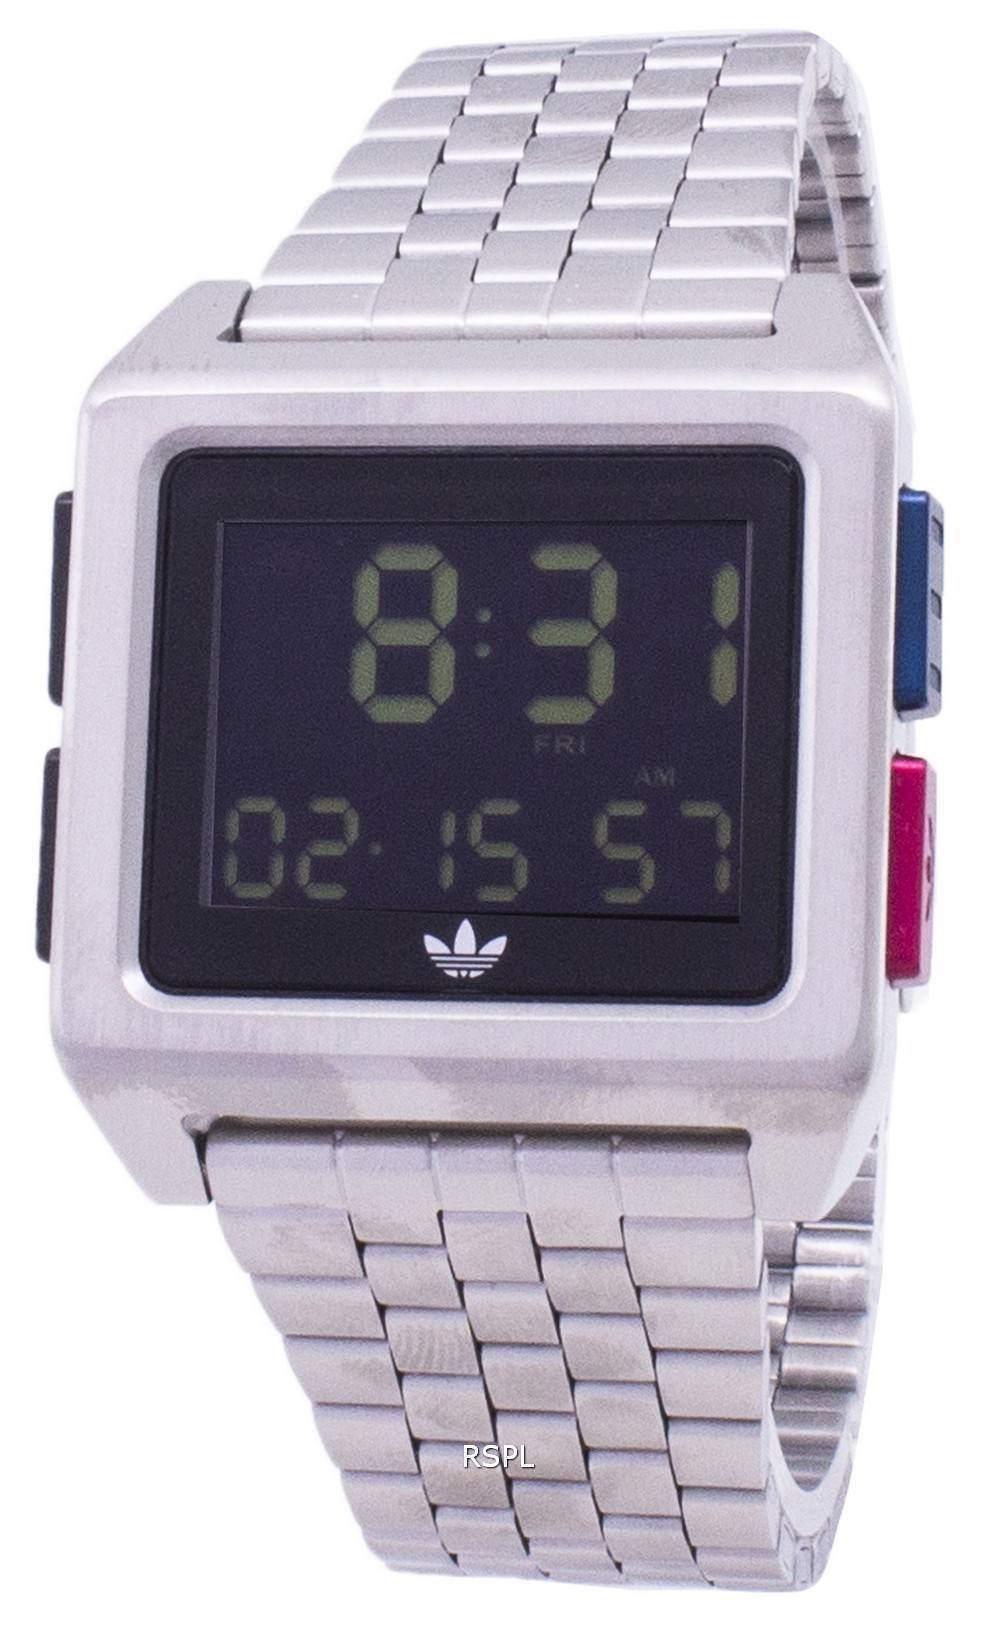 Adidas Archive M1 Z01-2924-00 Quartz Digital Men's Watch 